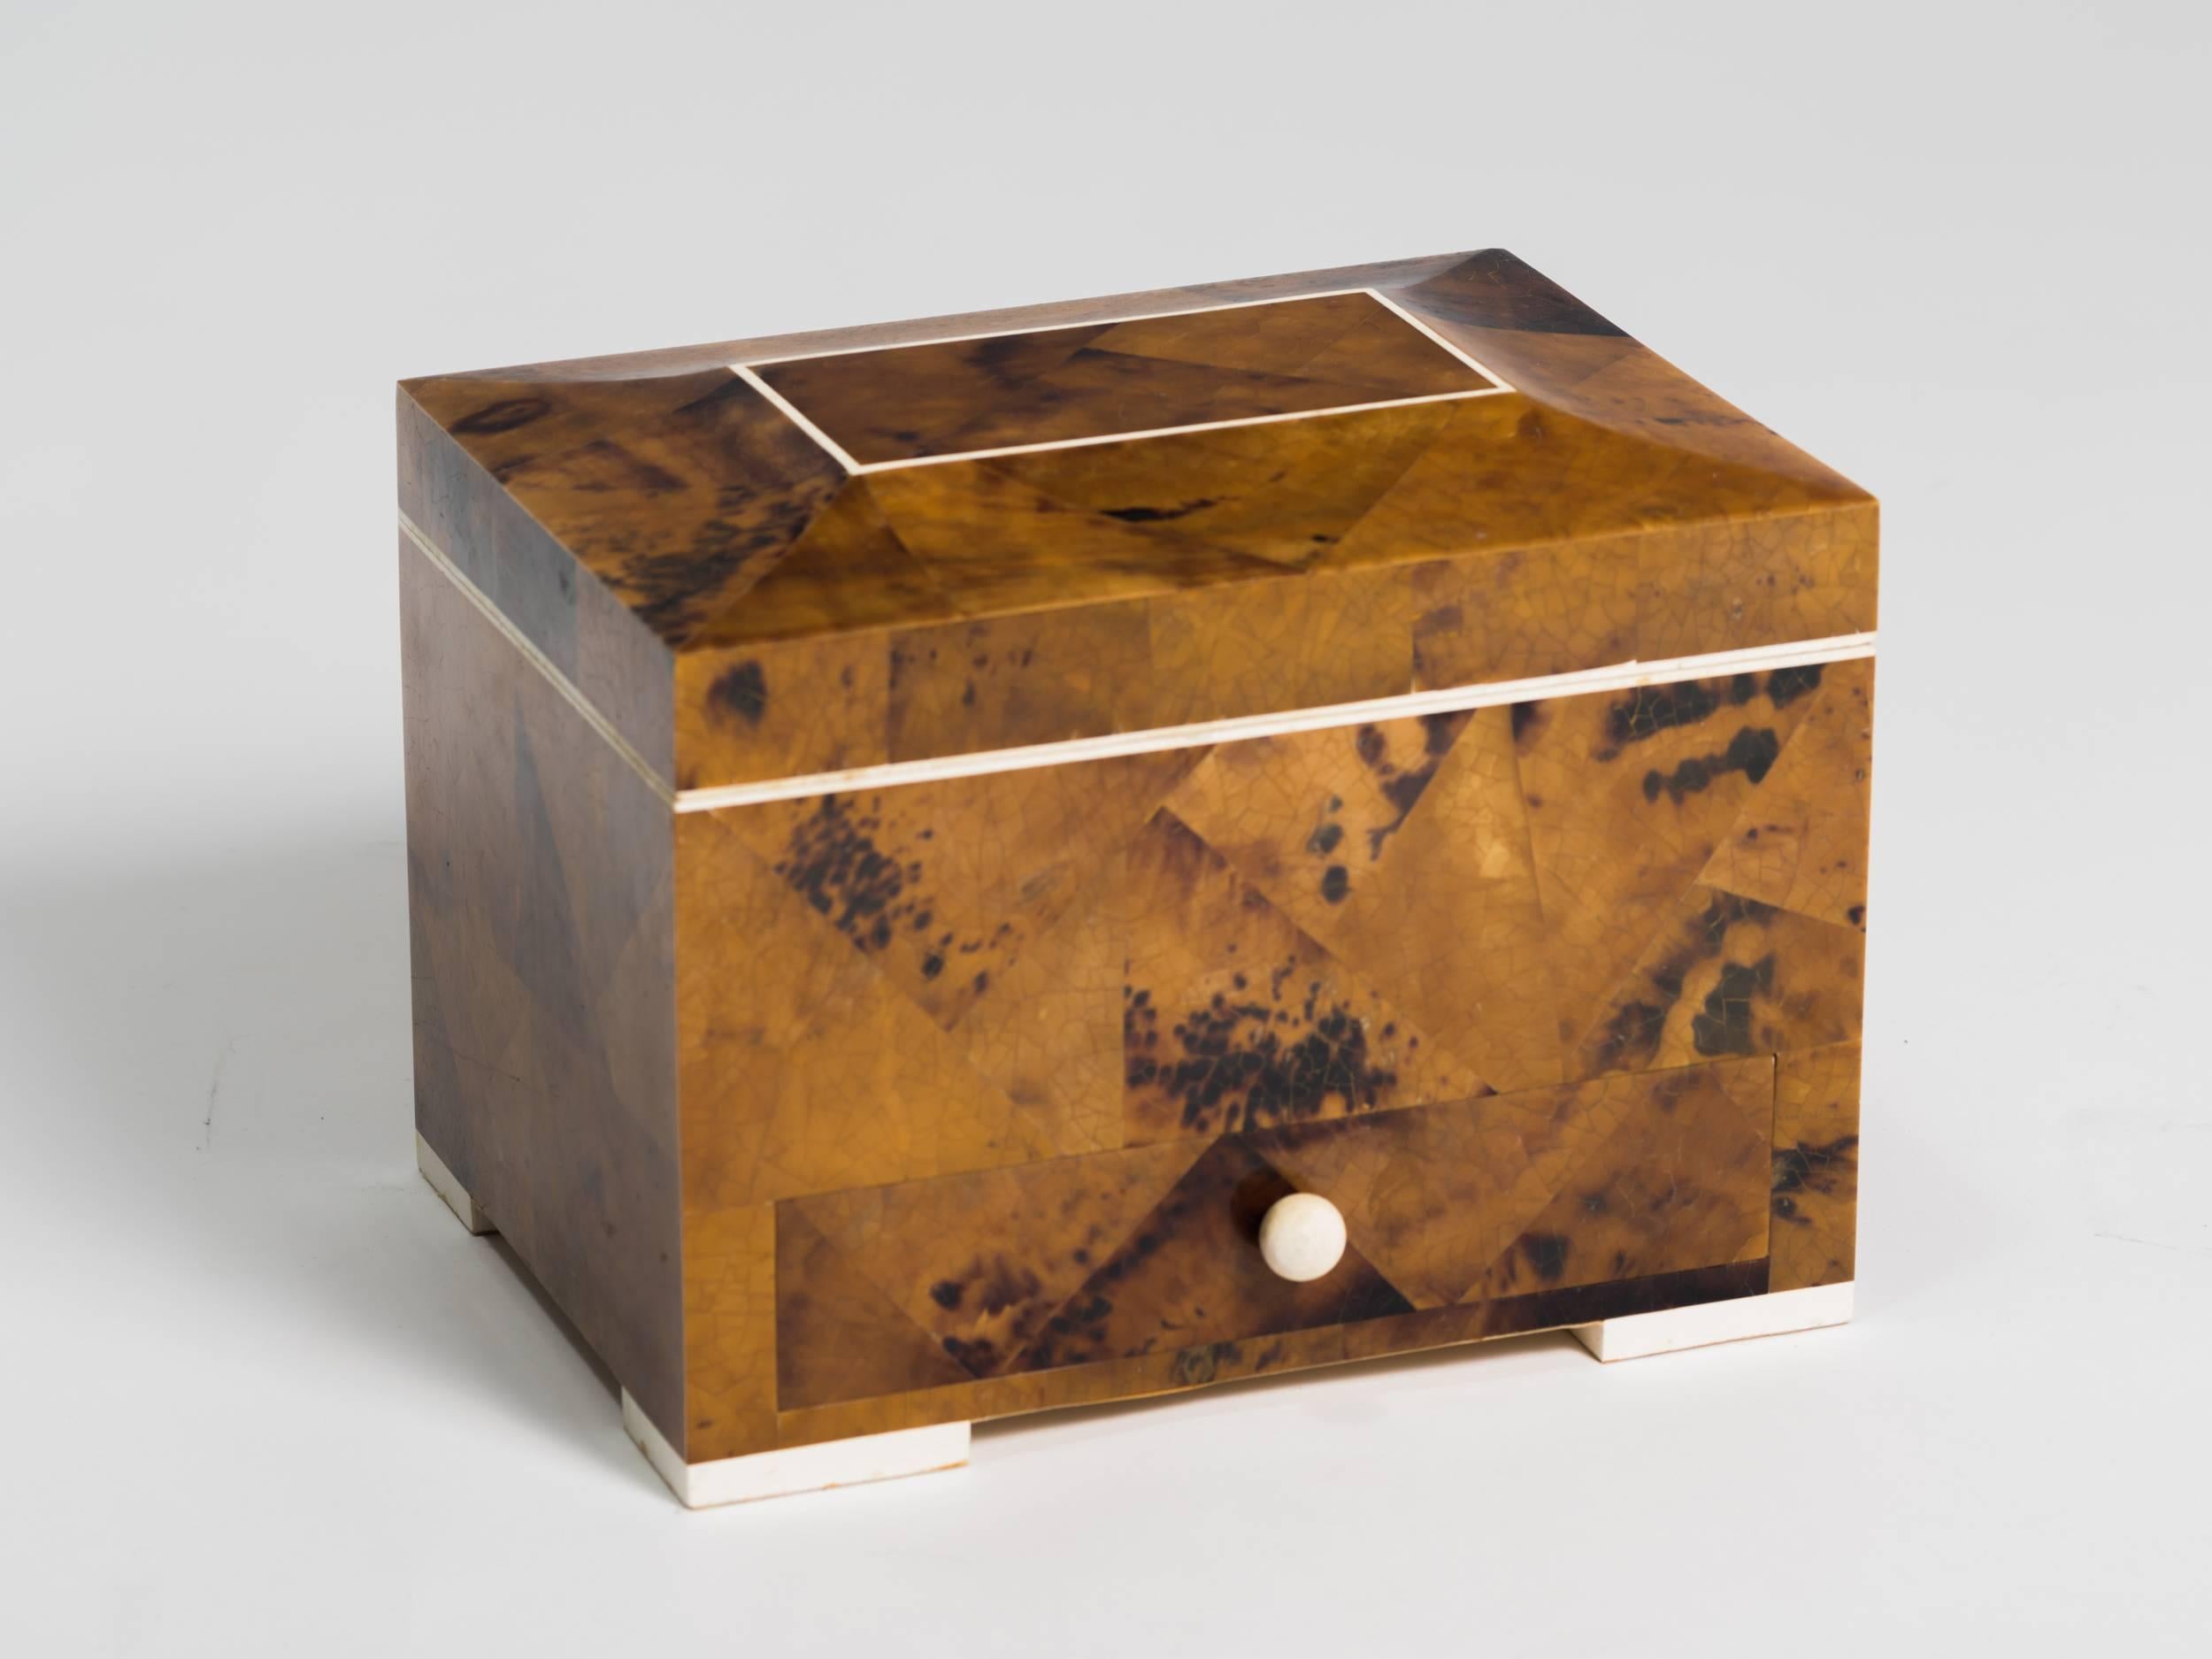 Stone jewelry box in a burl wood design.